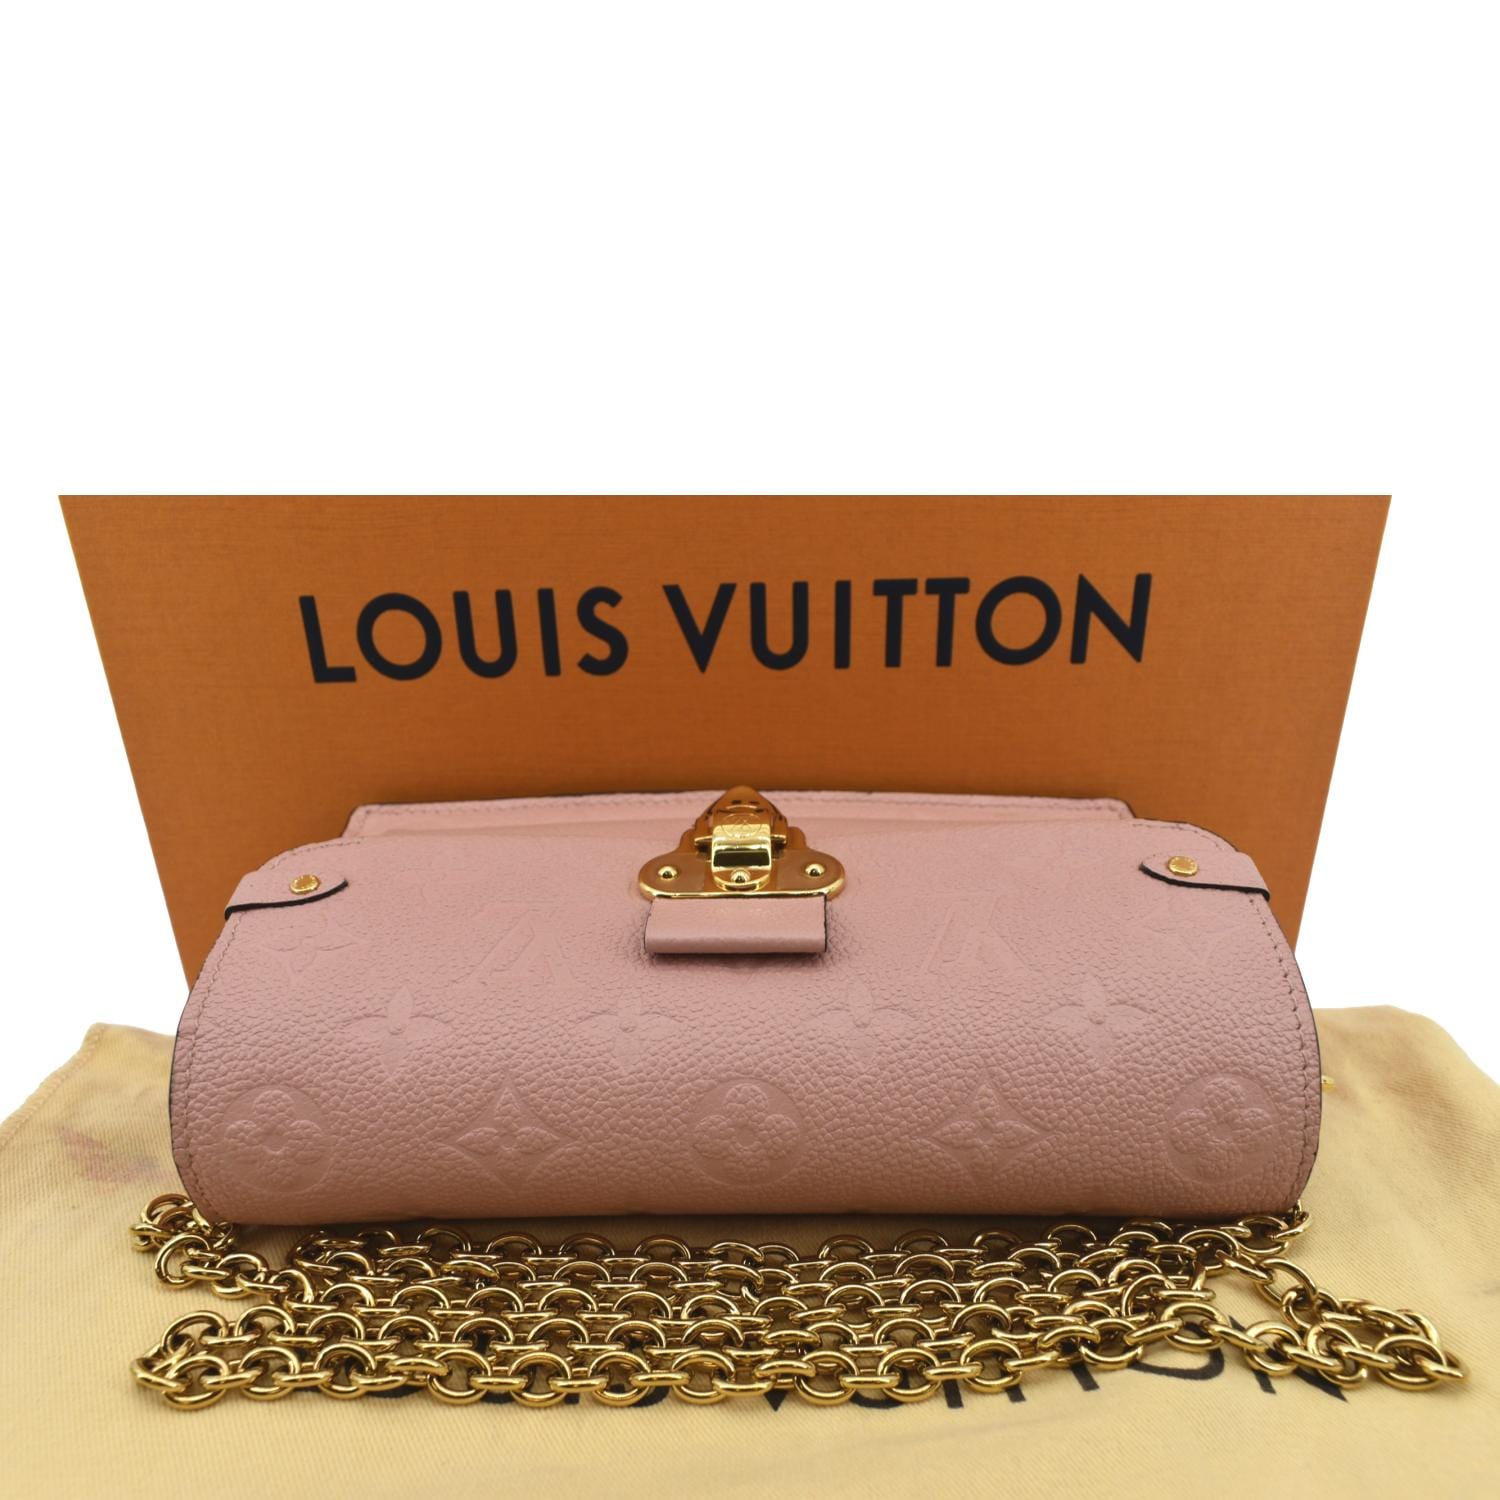 Louis Vuitton Vavin Chain Wallet, 2 Year Review